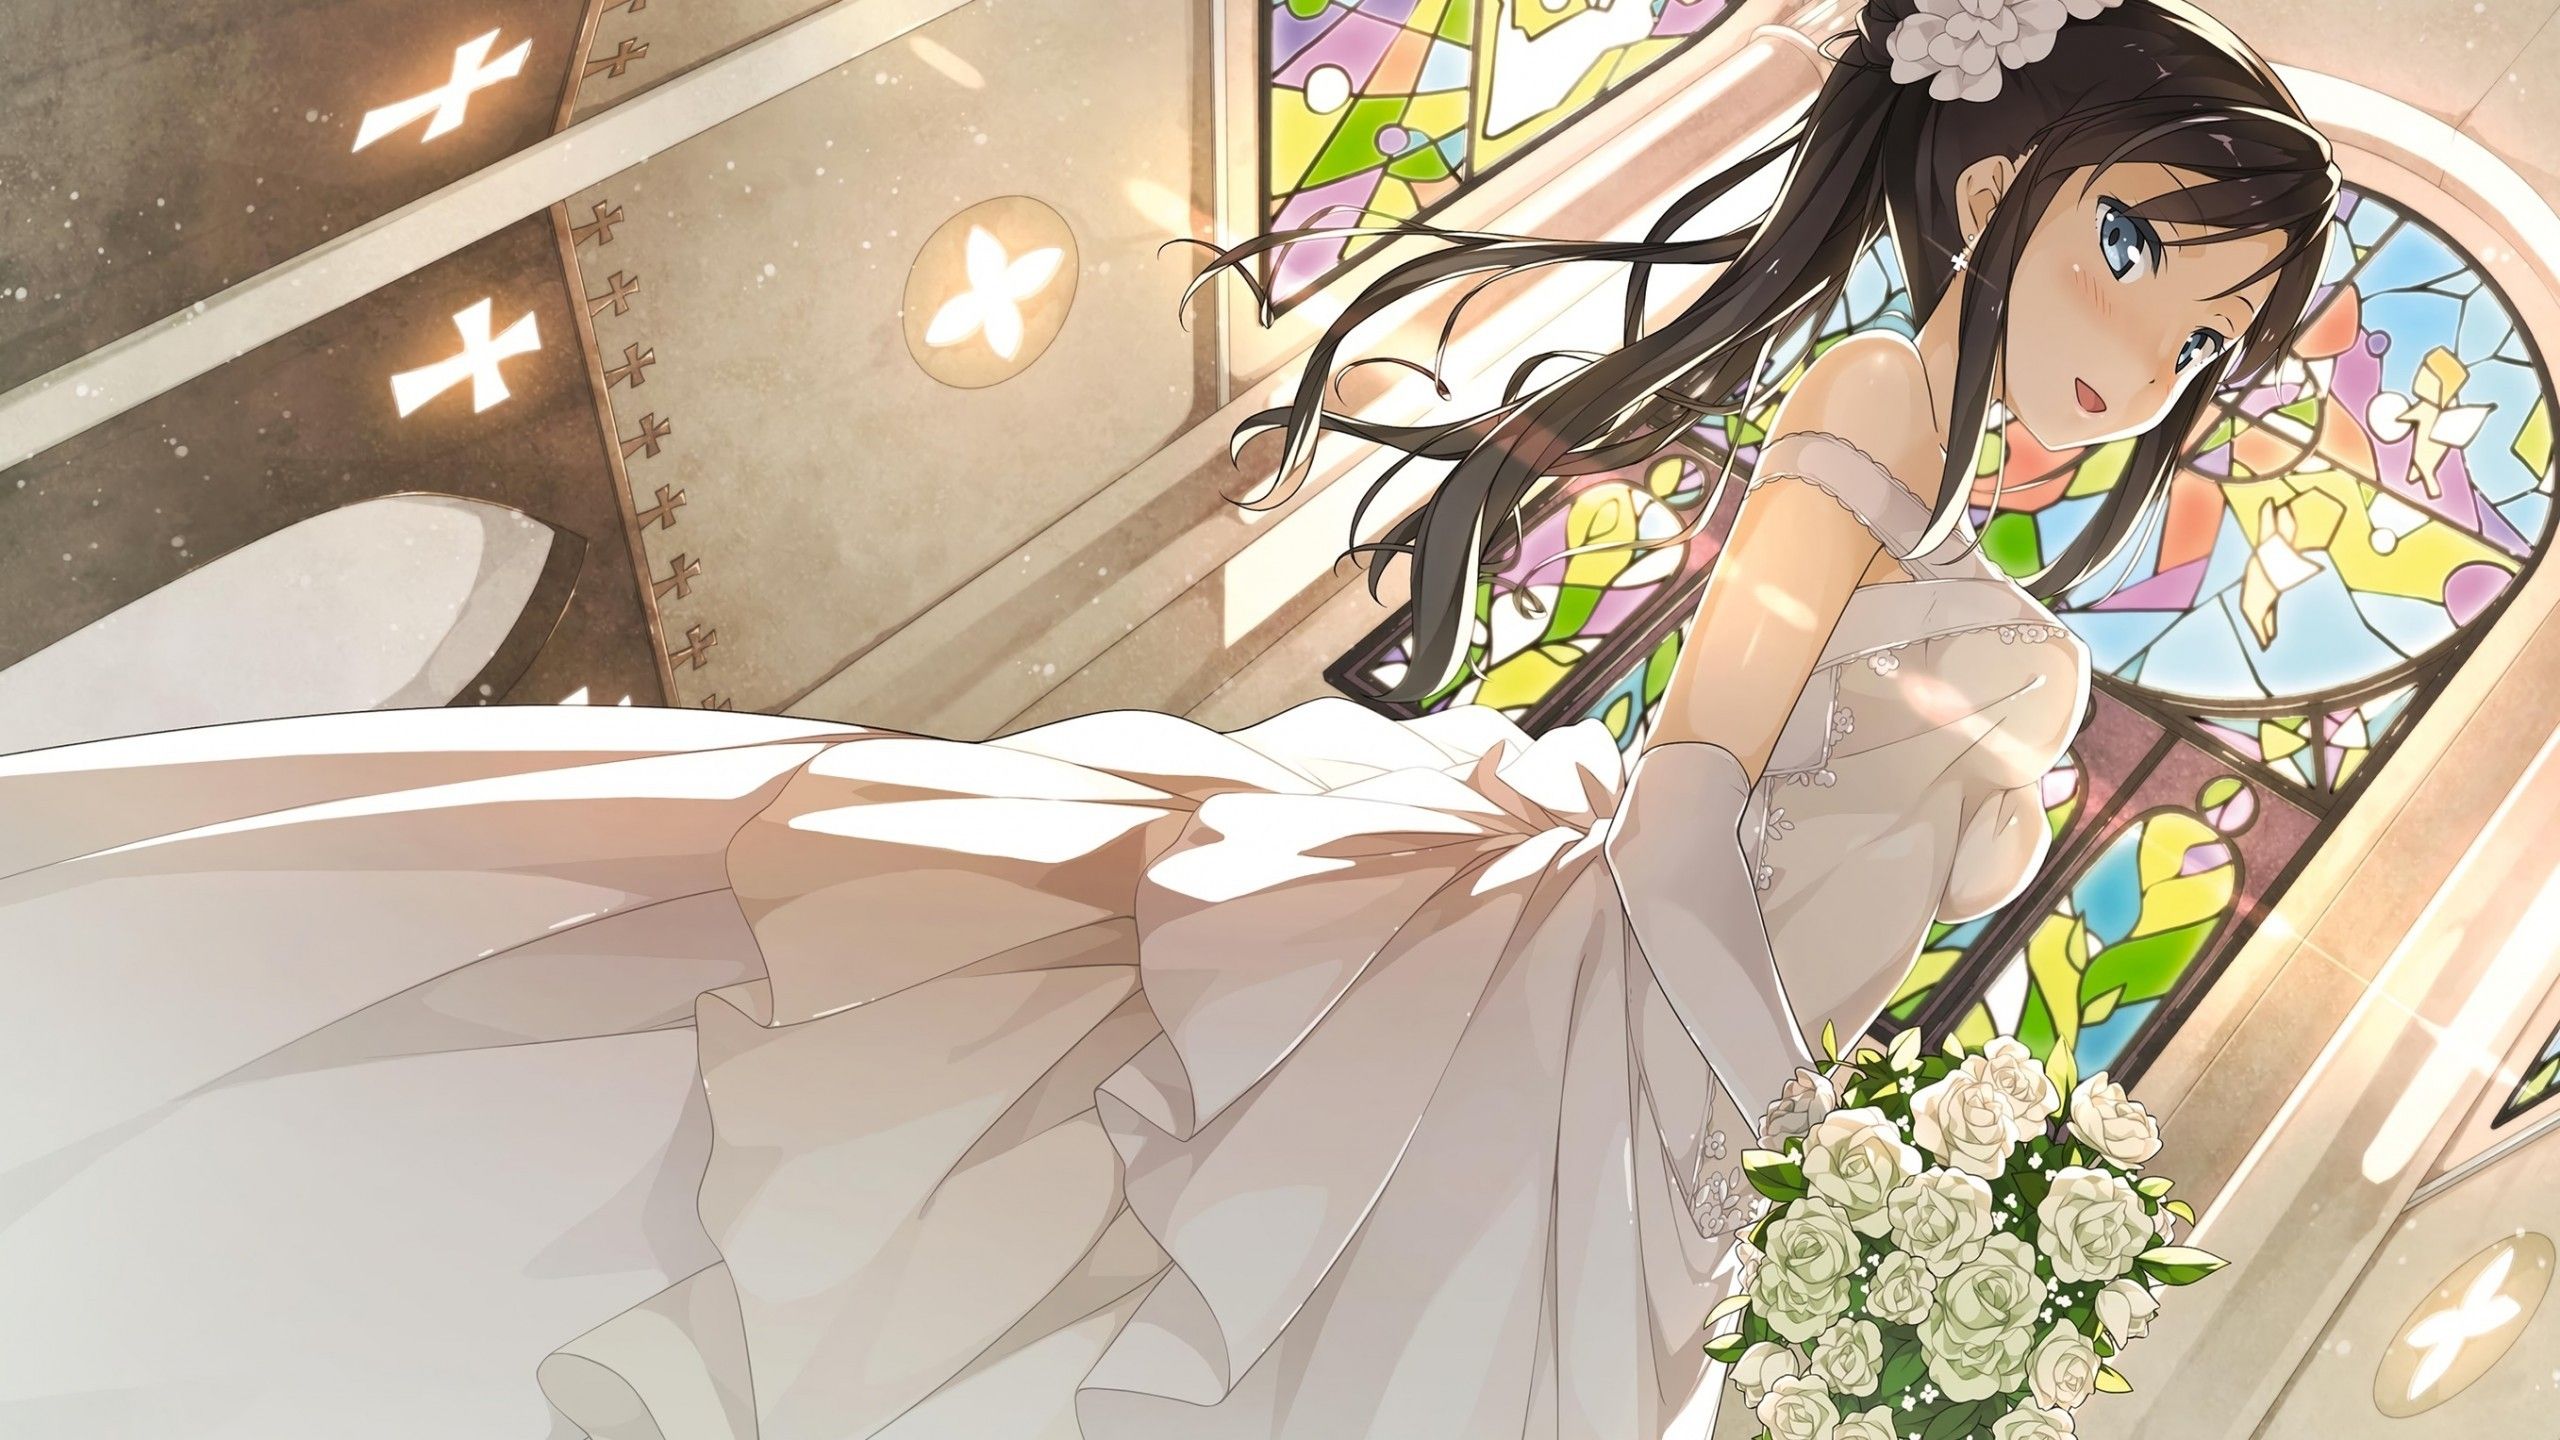 Download 2560x1440 Anime Bride, Wedding Dress, Flower Bouquet, Blue Eyes Wallpaper for iMac 27 inch